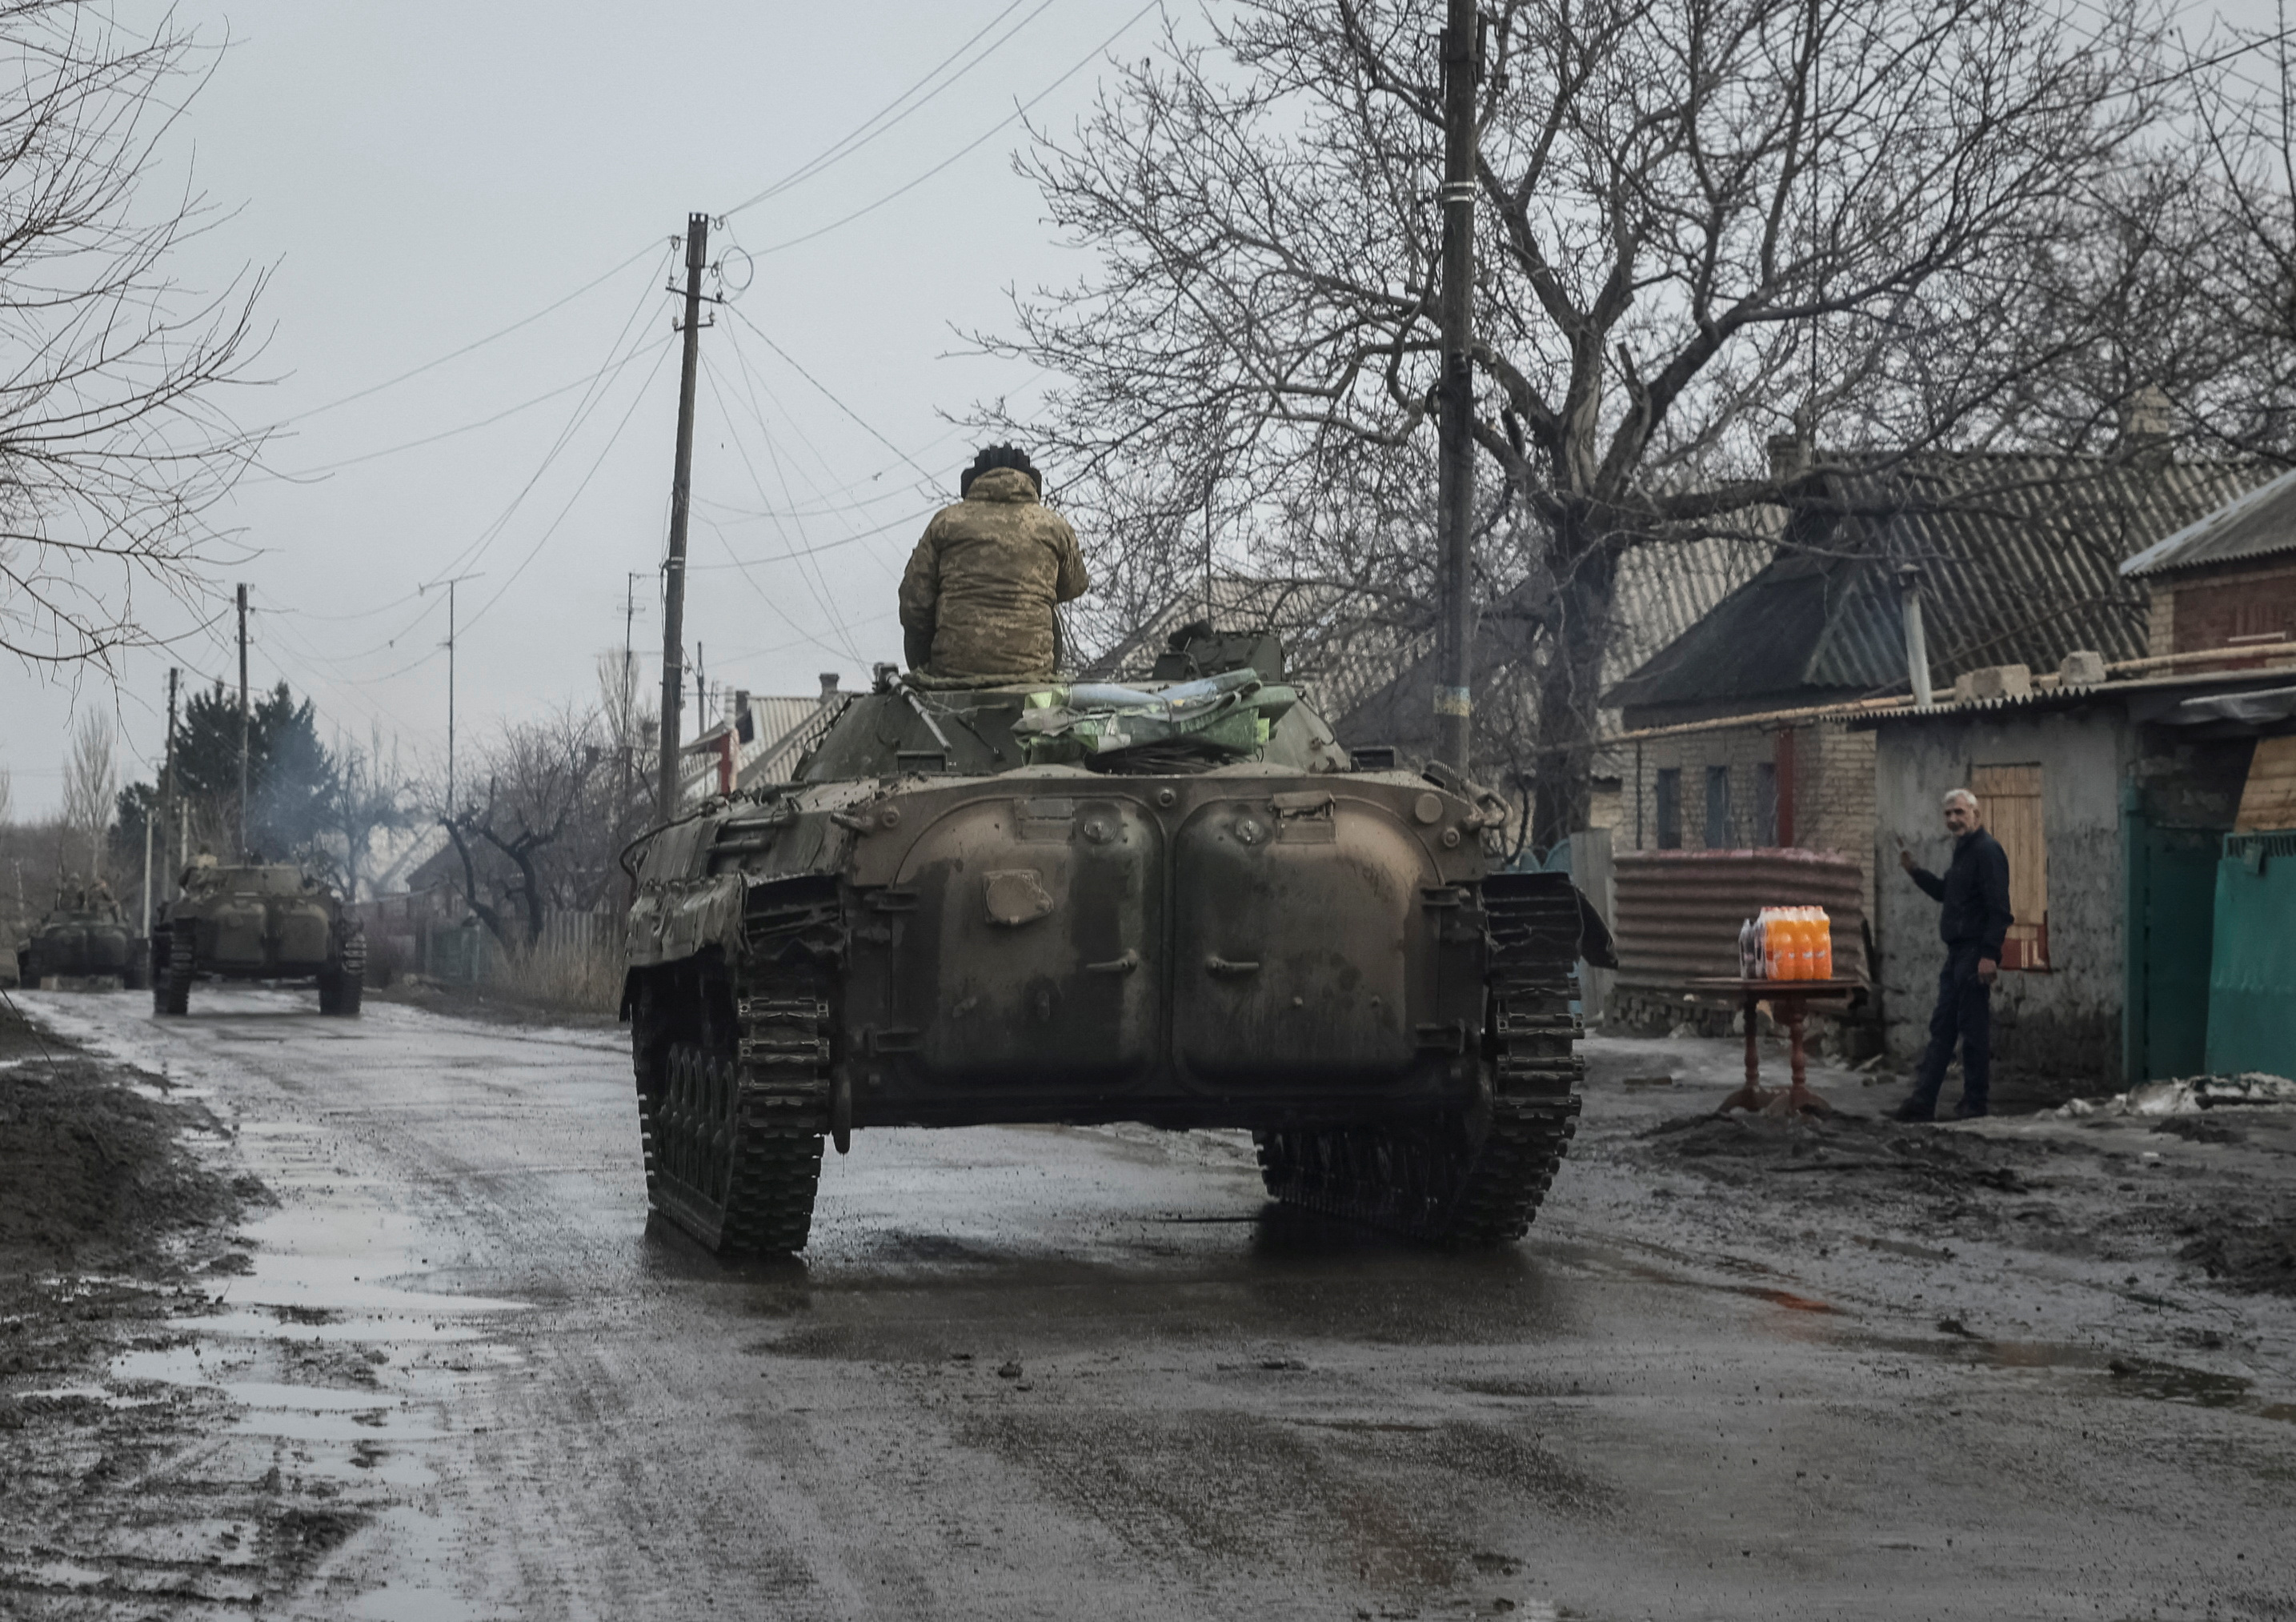 Ukrainian service members ride BMP-2 infantry fighting vehicles near Bakhmut